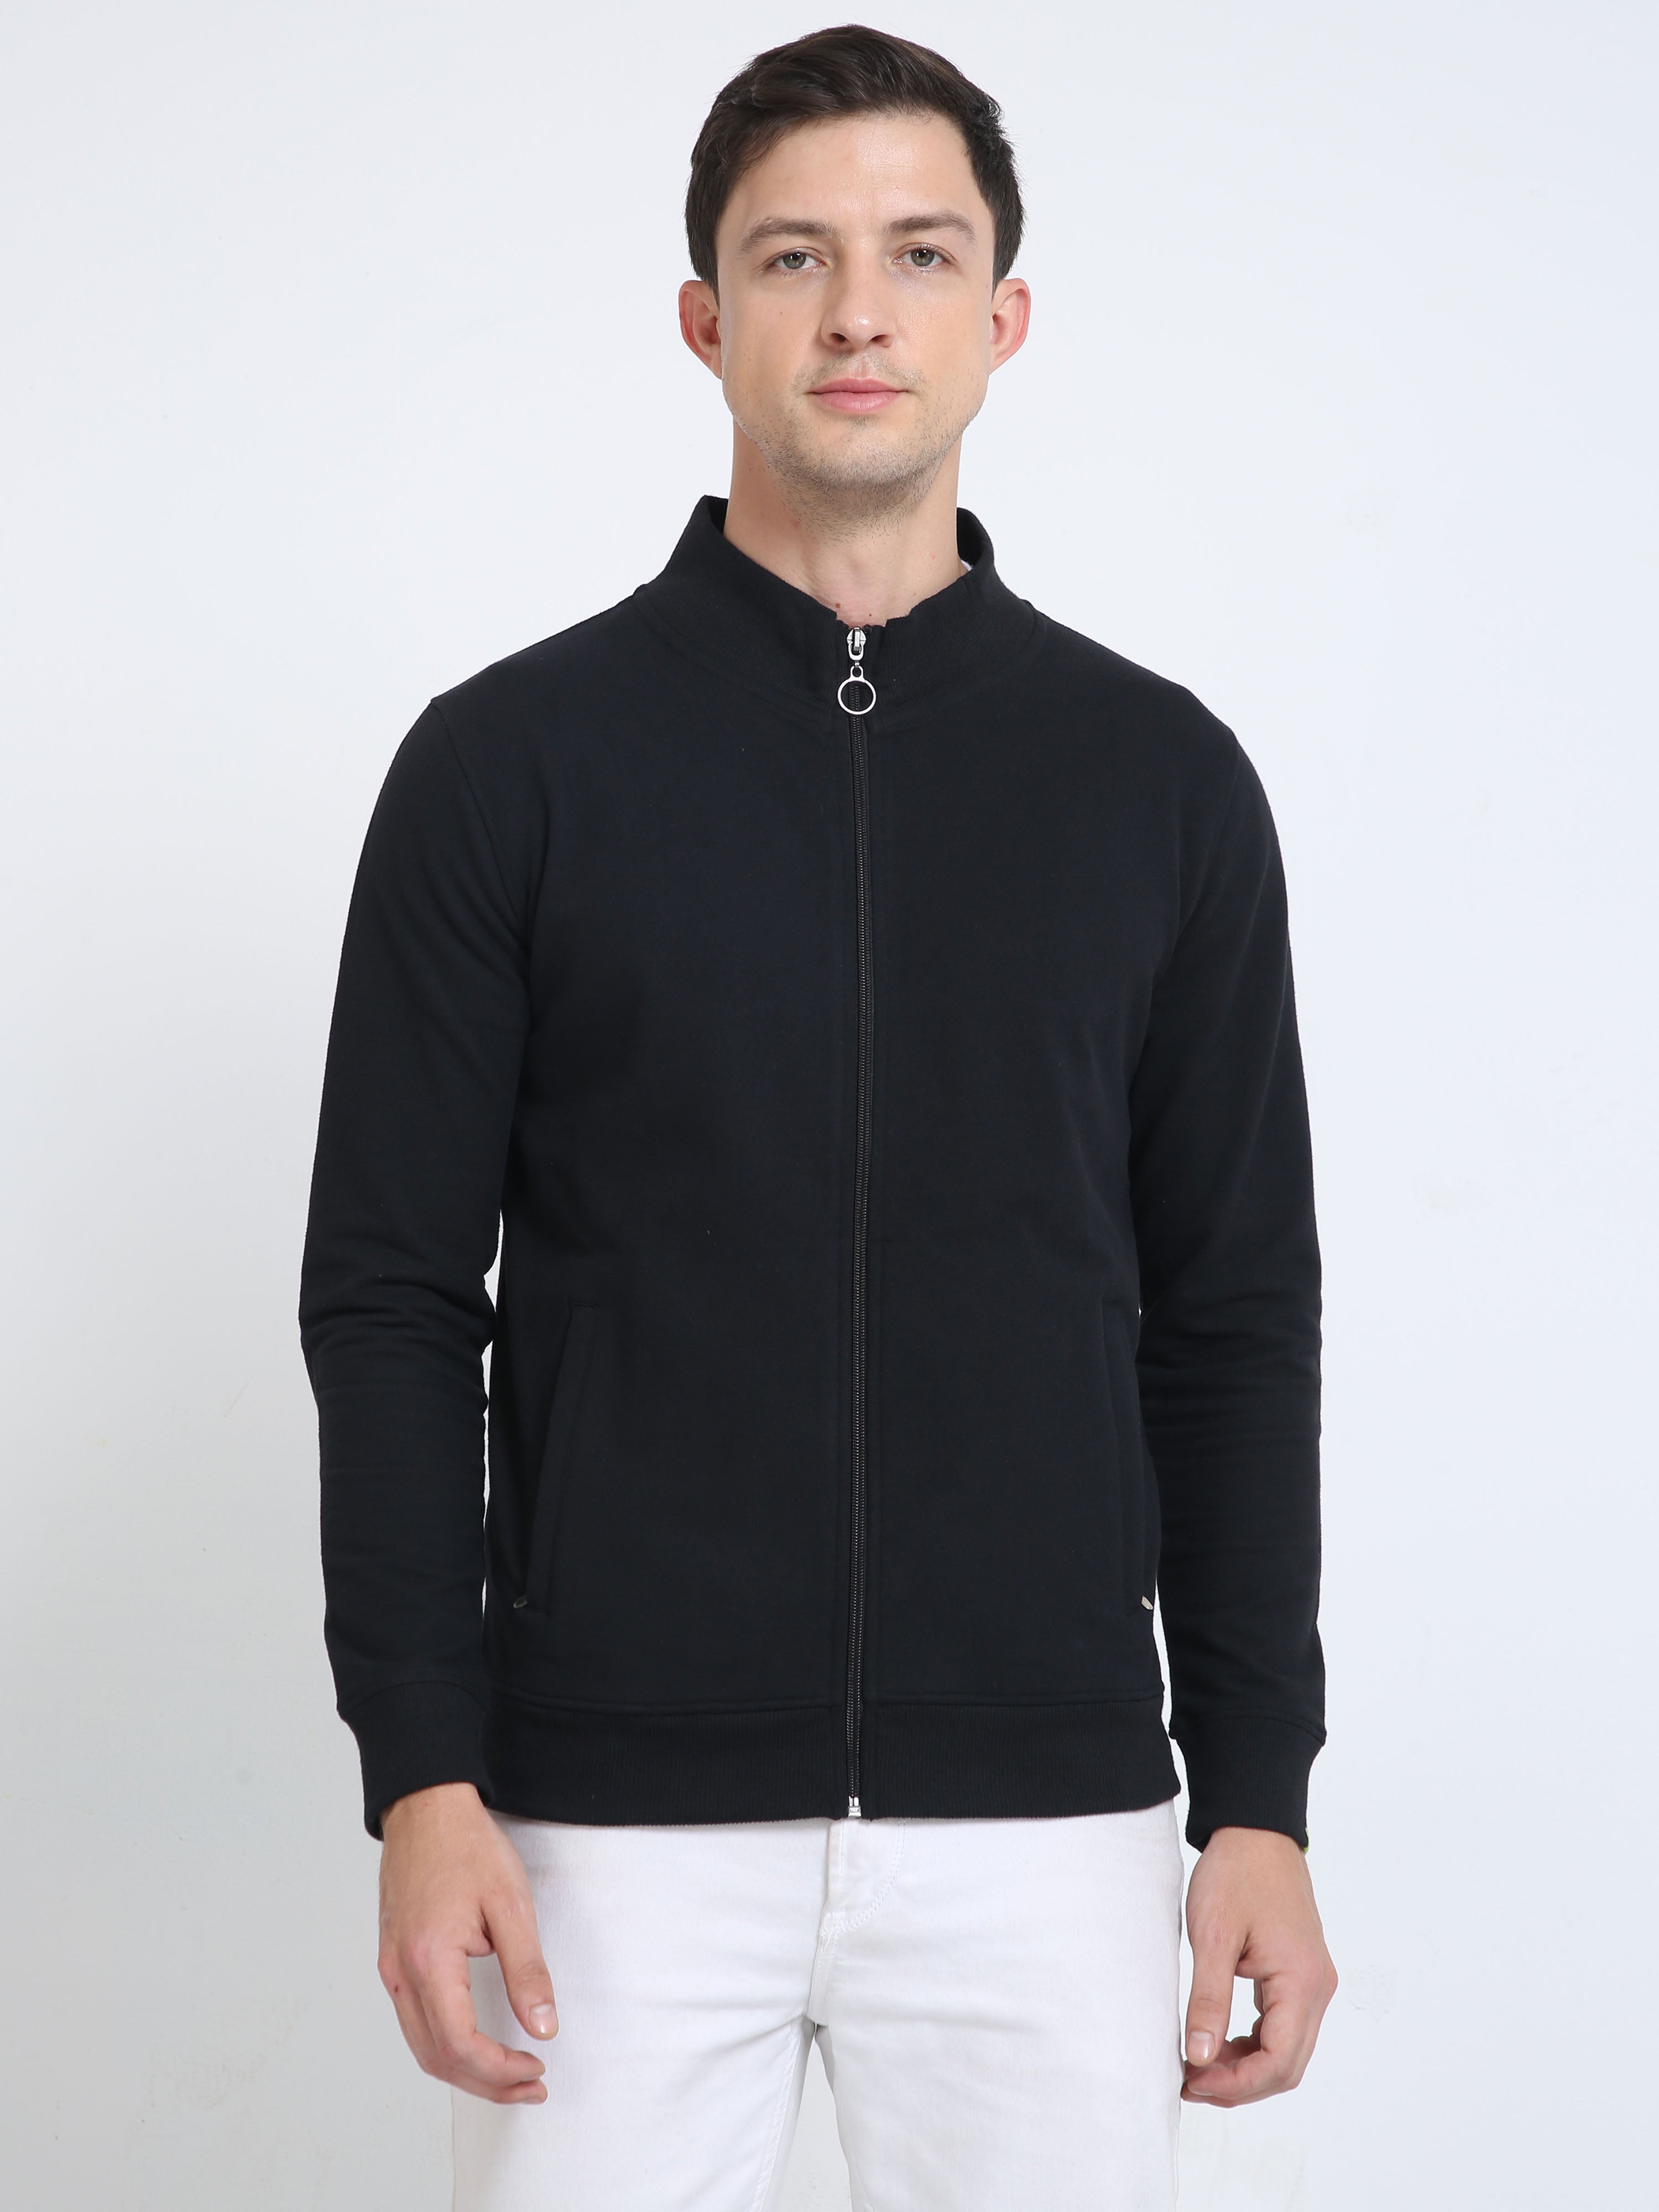 Buy Black Sustainable Jacket Men's Online At Freat Price